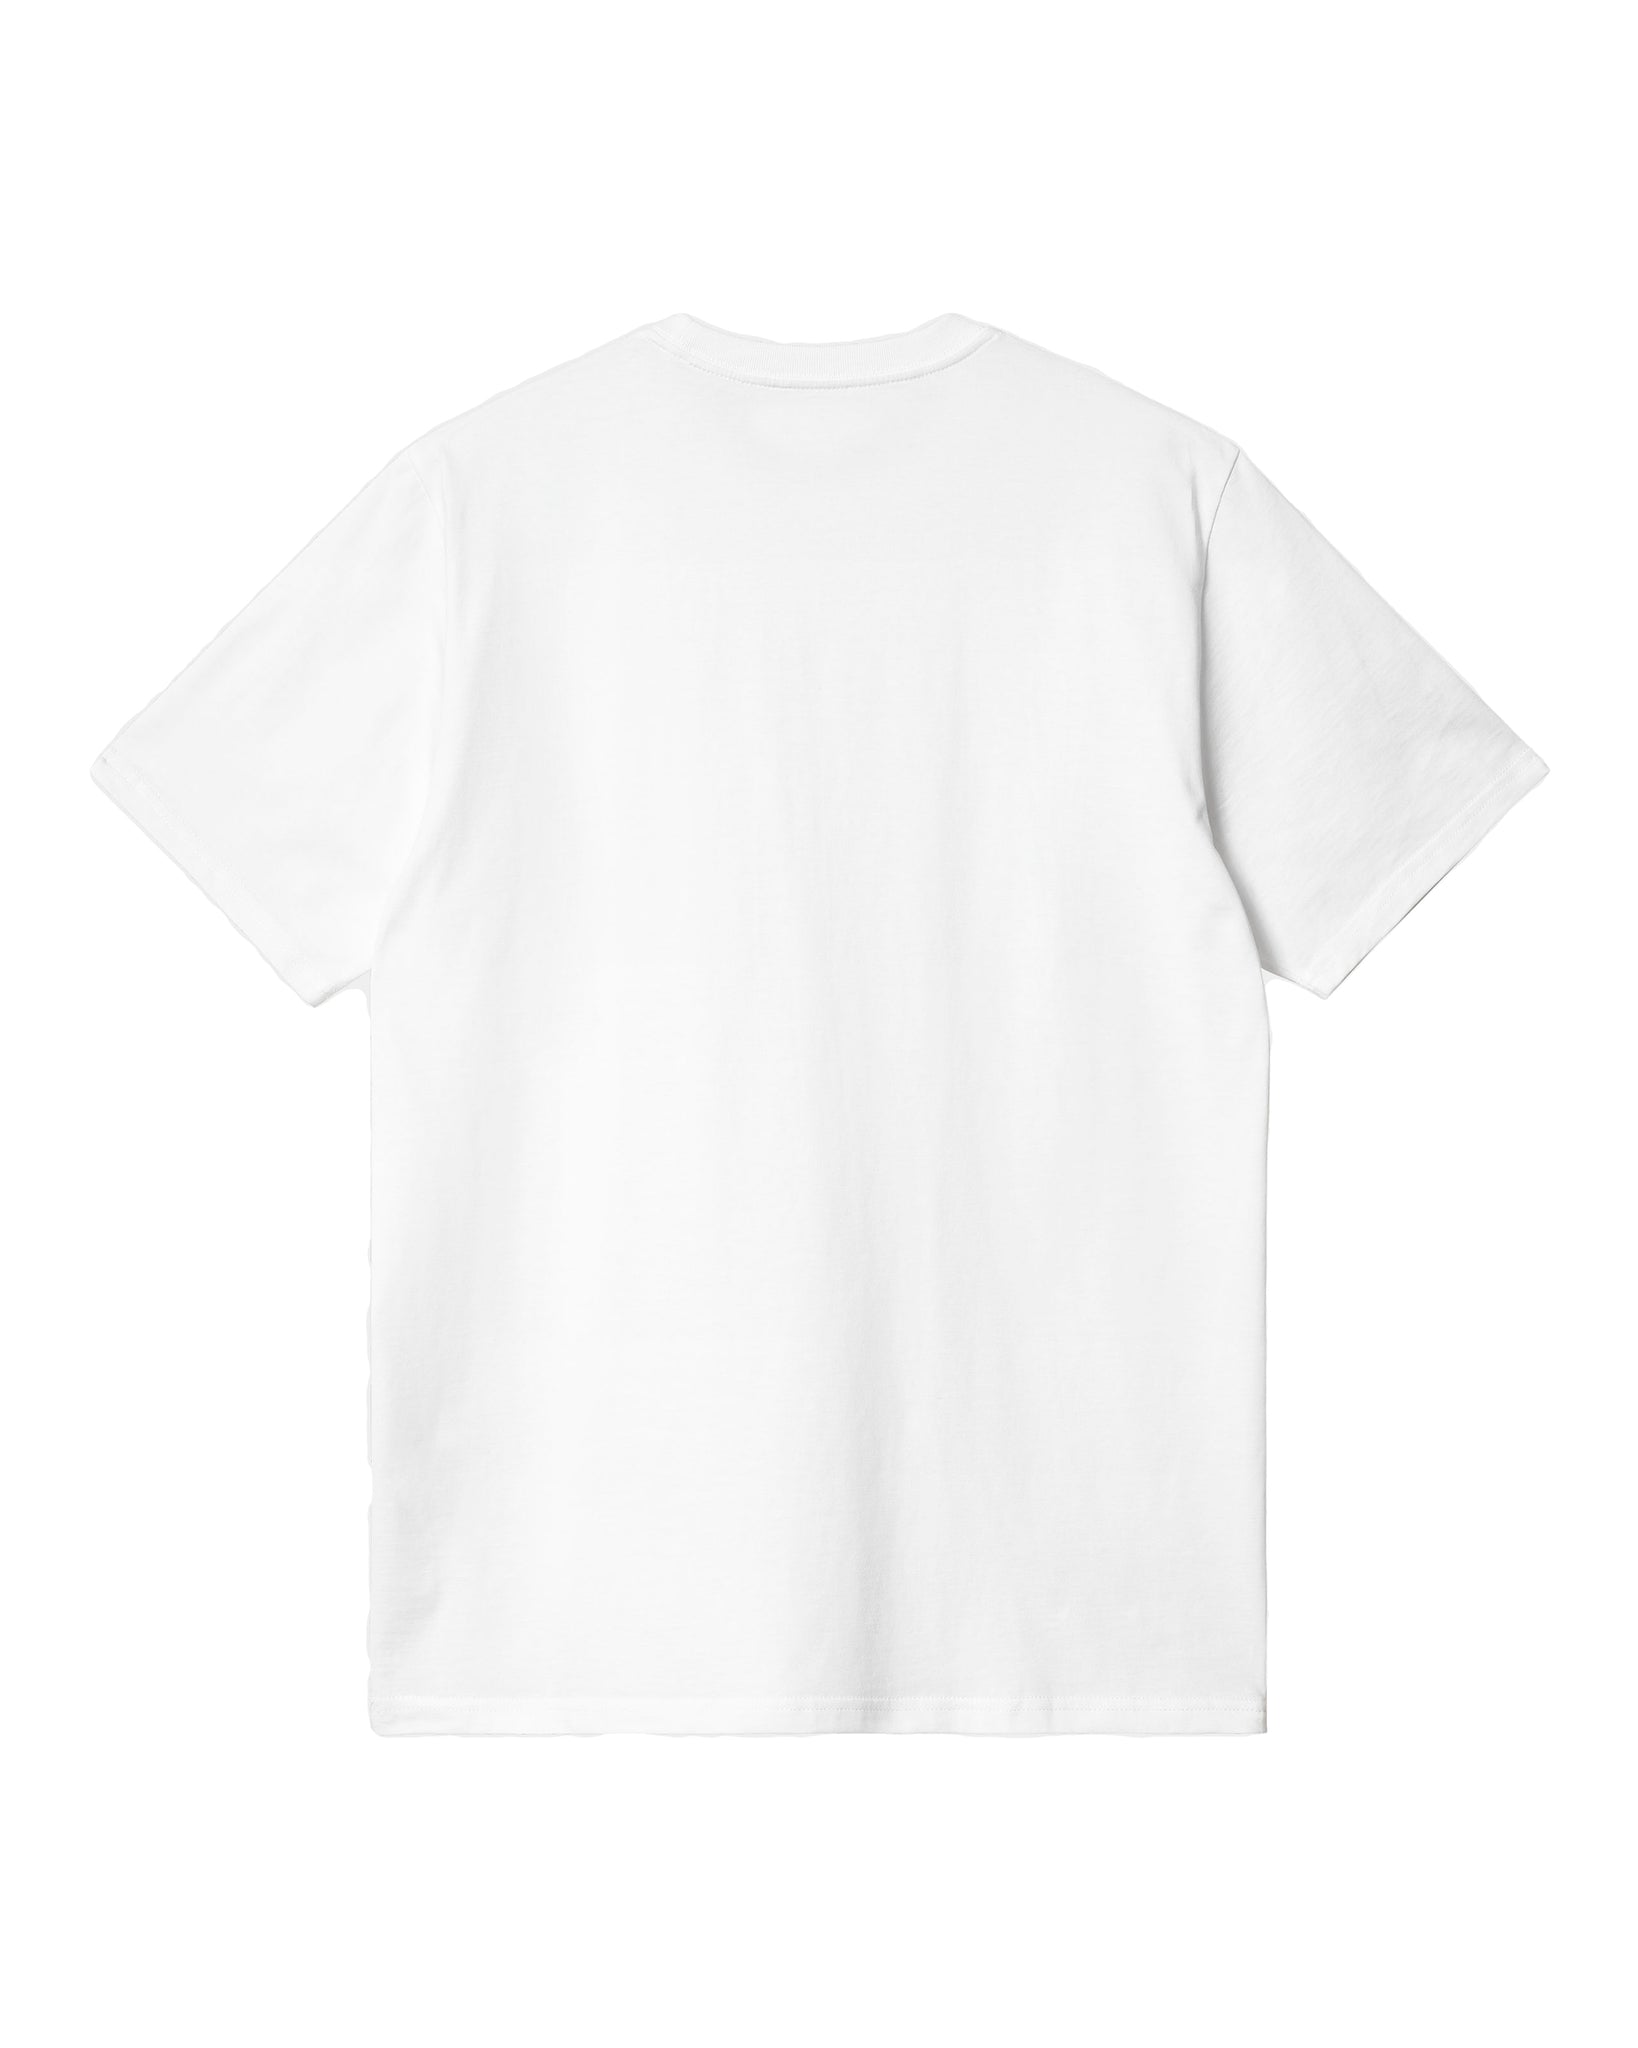 SS Madison T-Shirt - White/Black